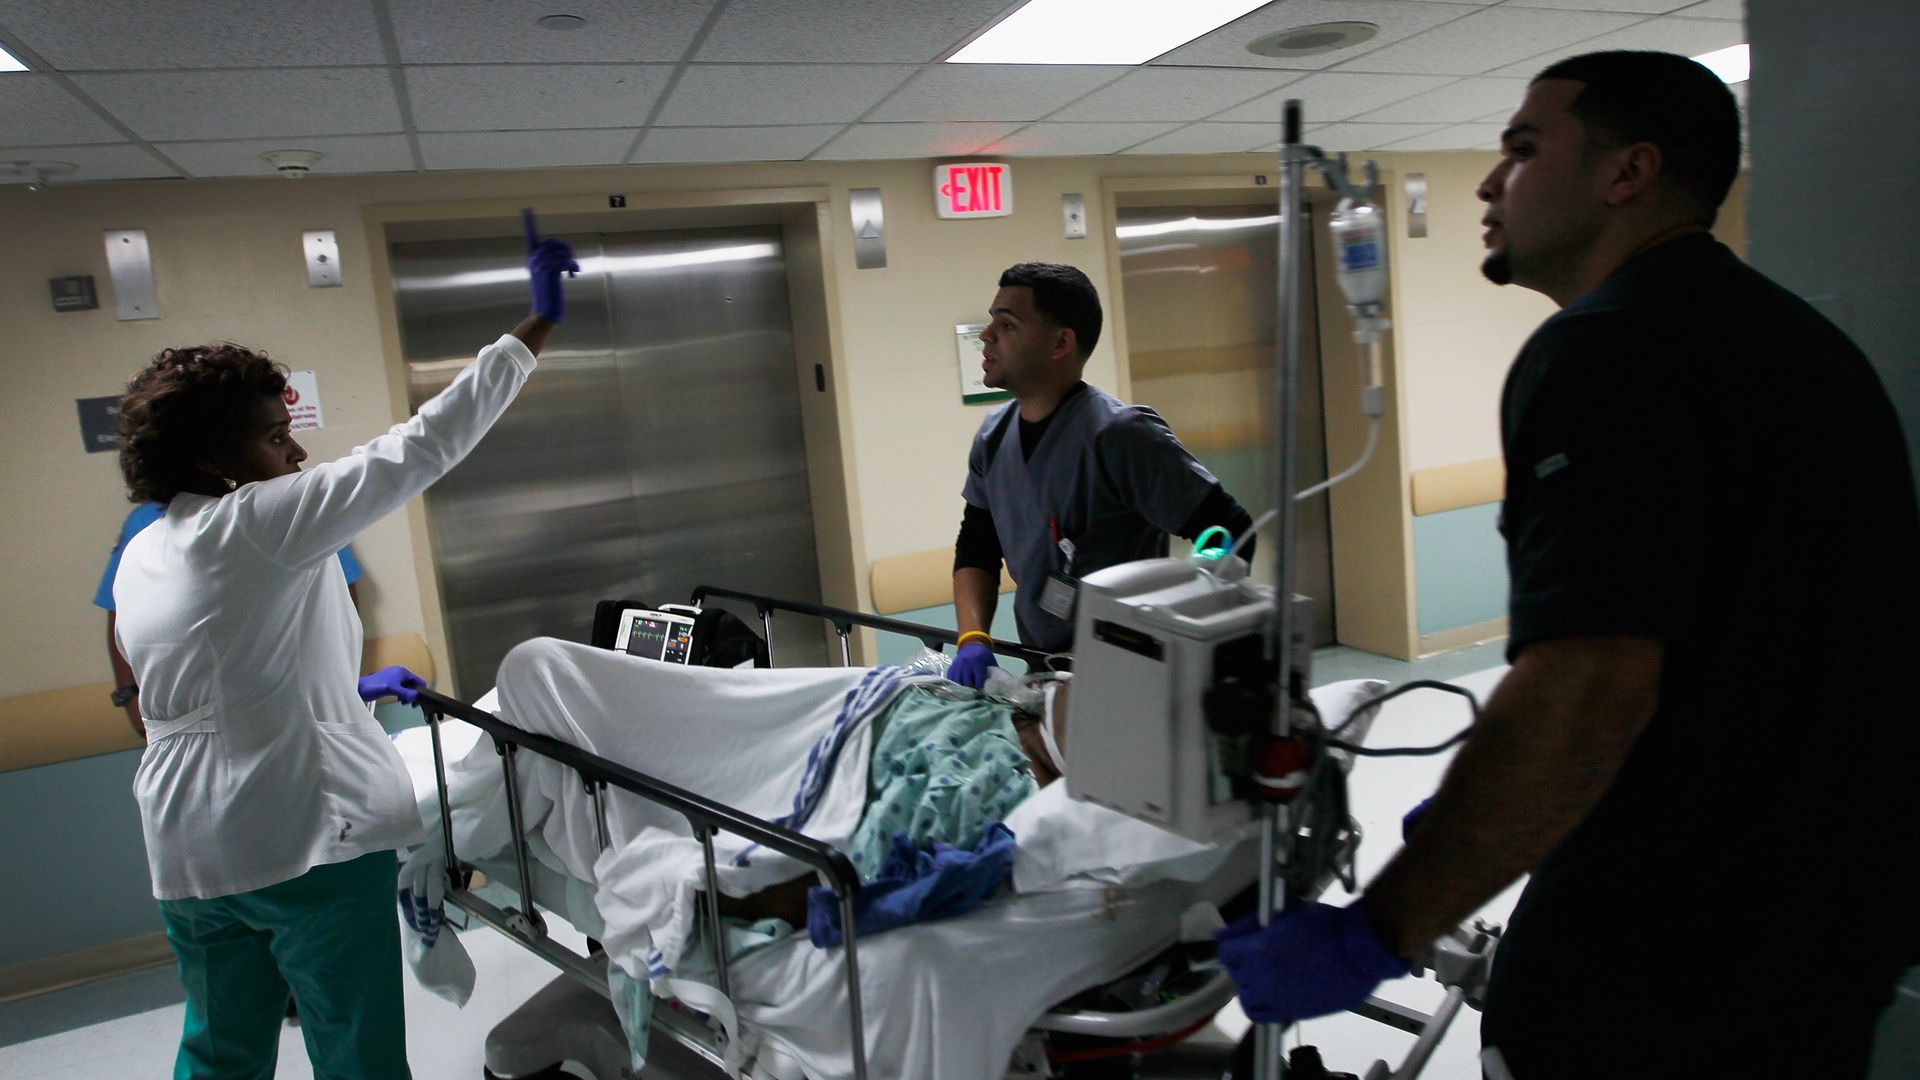 Nurses pushing hospital bed down hallway